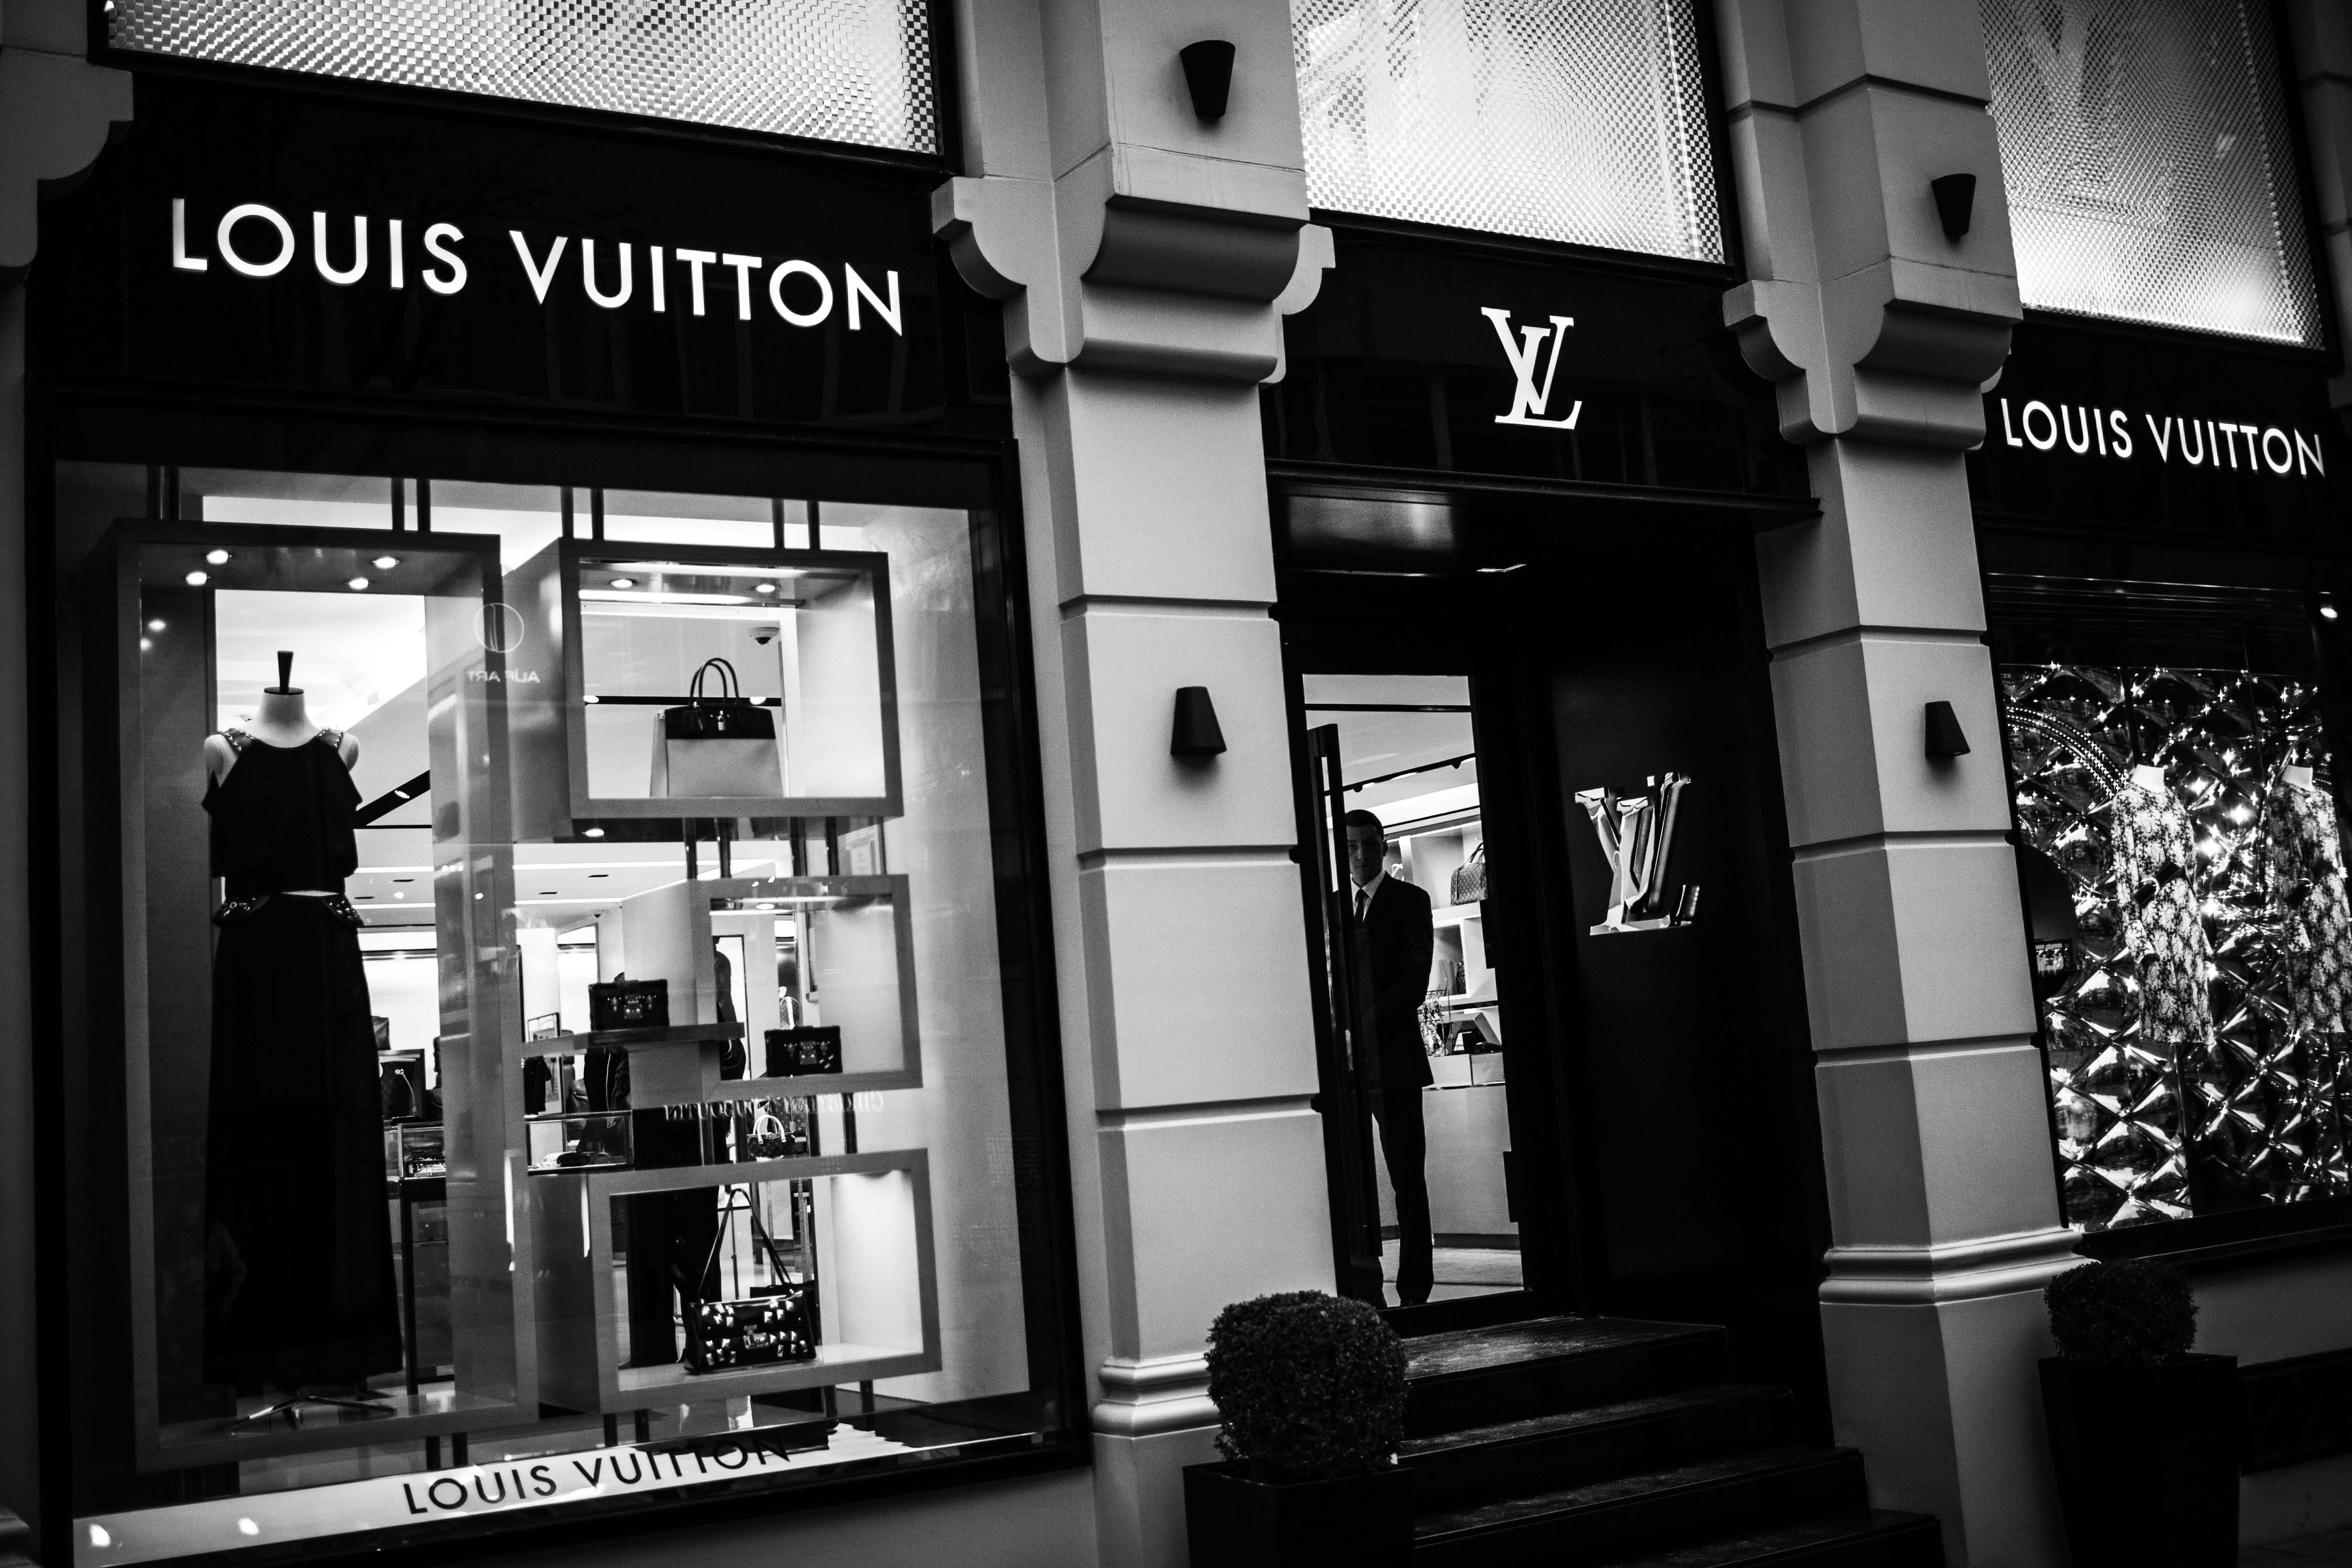 LVMH Moët Hennessy Louis Vuitton, to pay €10 million against settlement:  Paris court validation